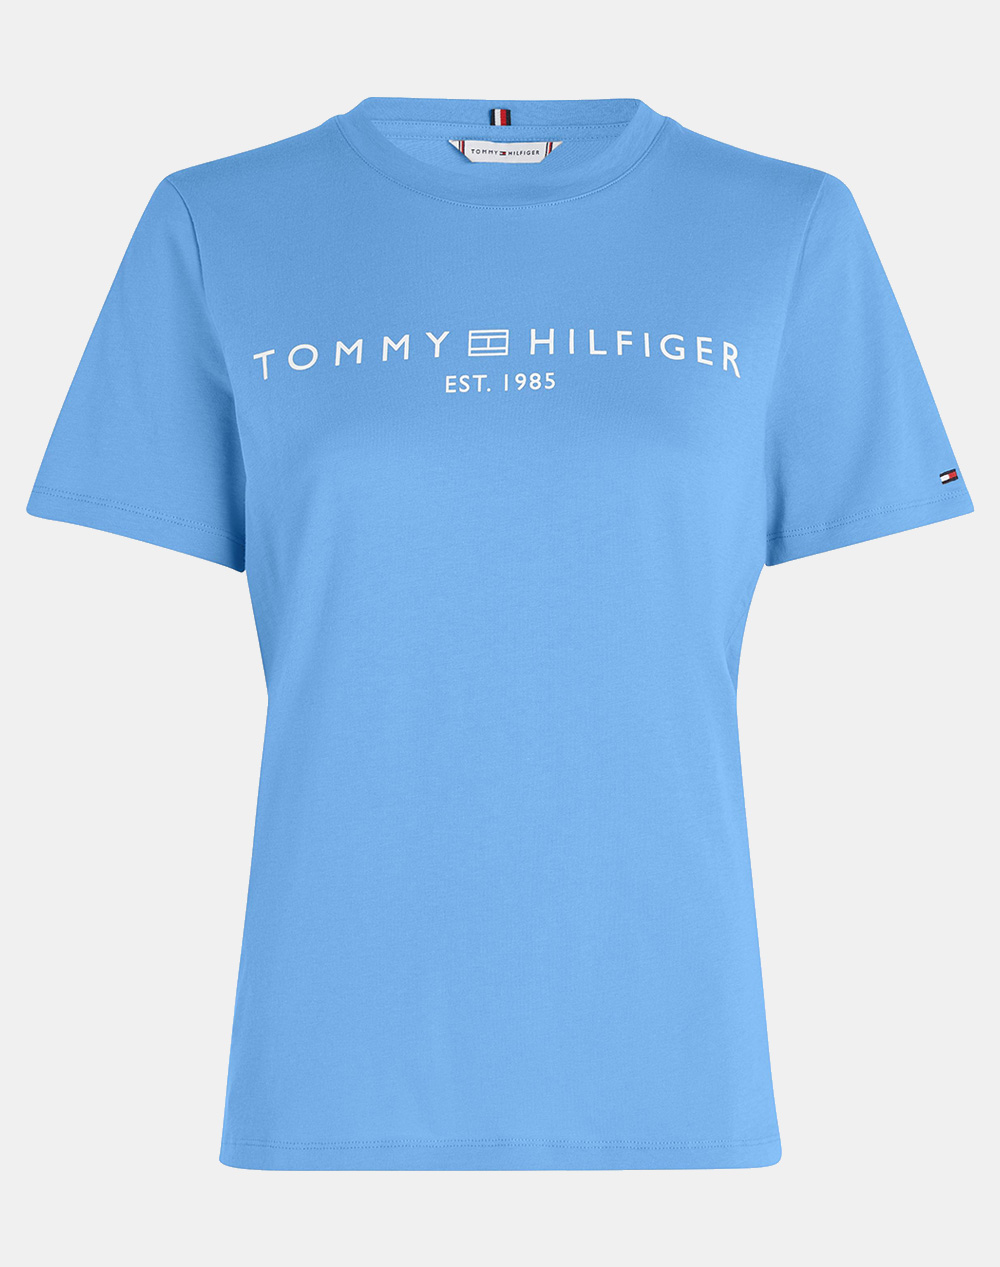 TOMMY HILFIGER REG CORP LOGO C-NK WW0WW40276-C30 LightBlue